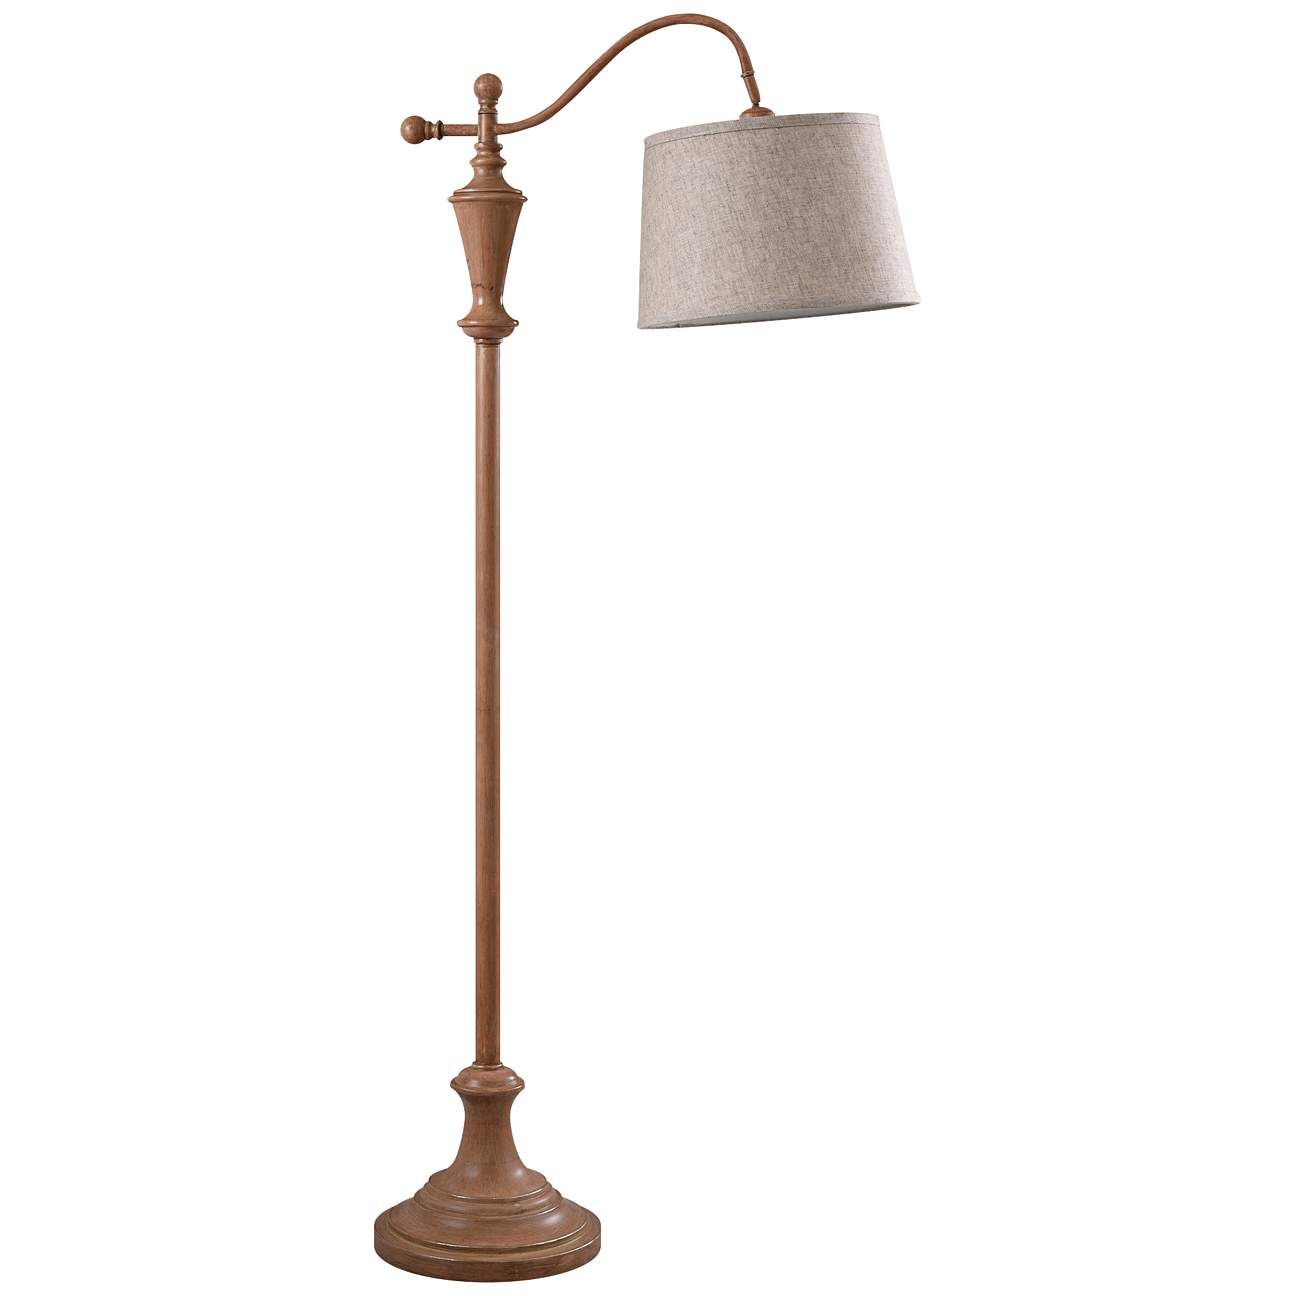 Vintage Walnut Wood Downbridge Floor Lamp with Oatmeal Shade | LampsPlus.com